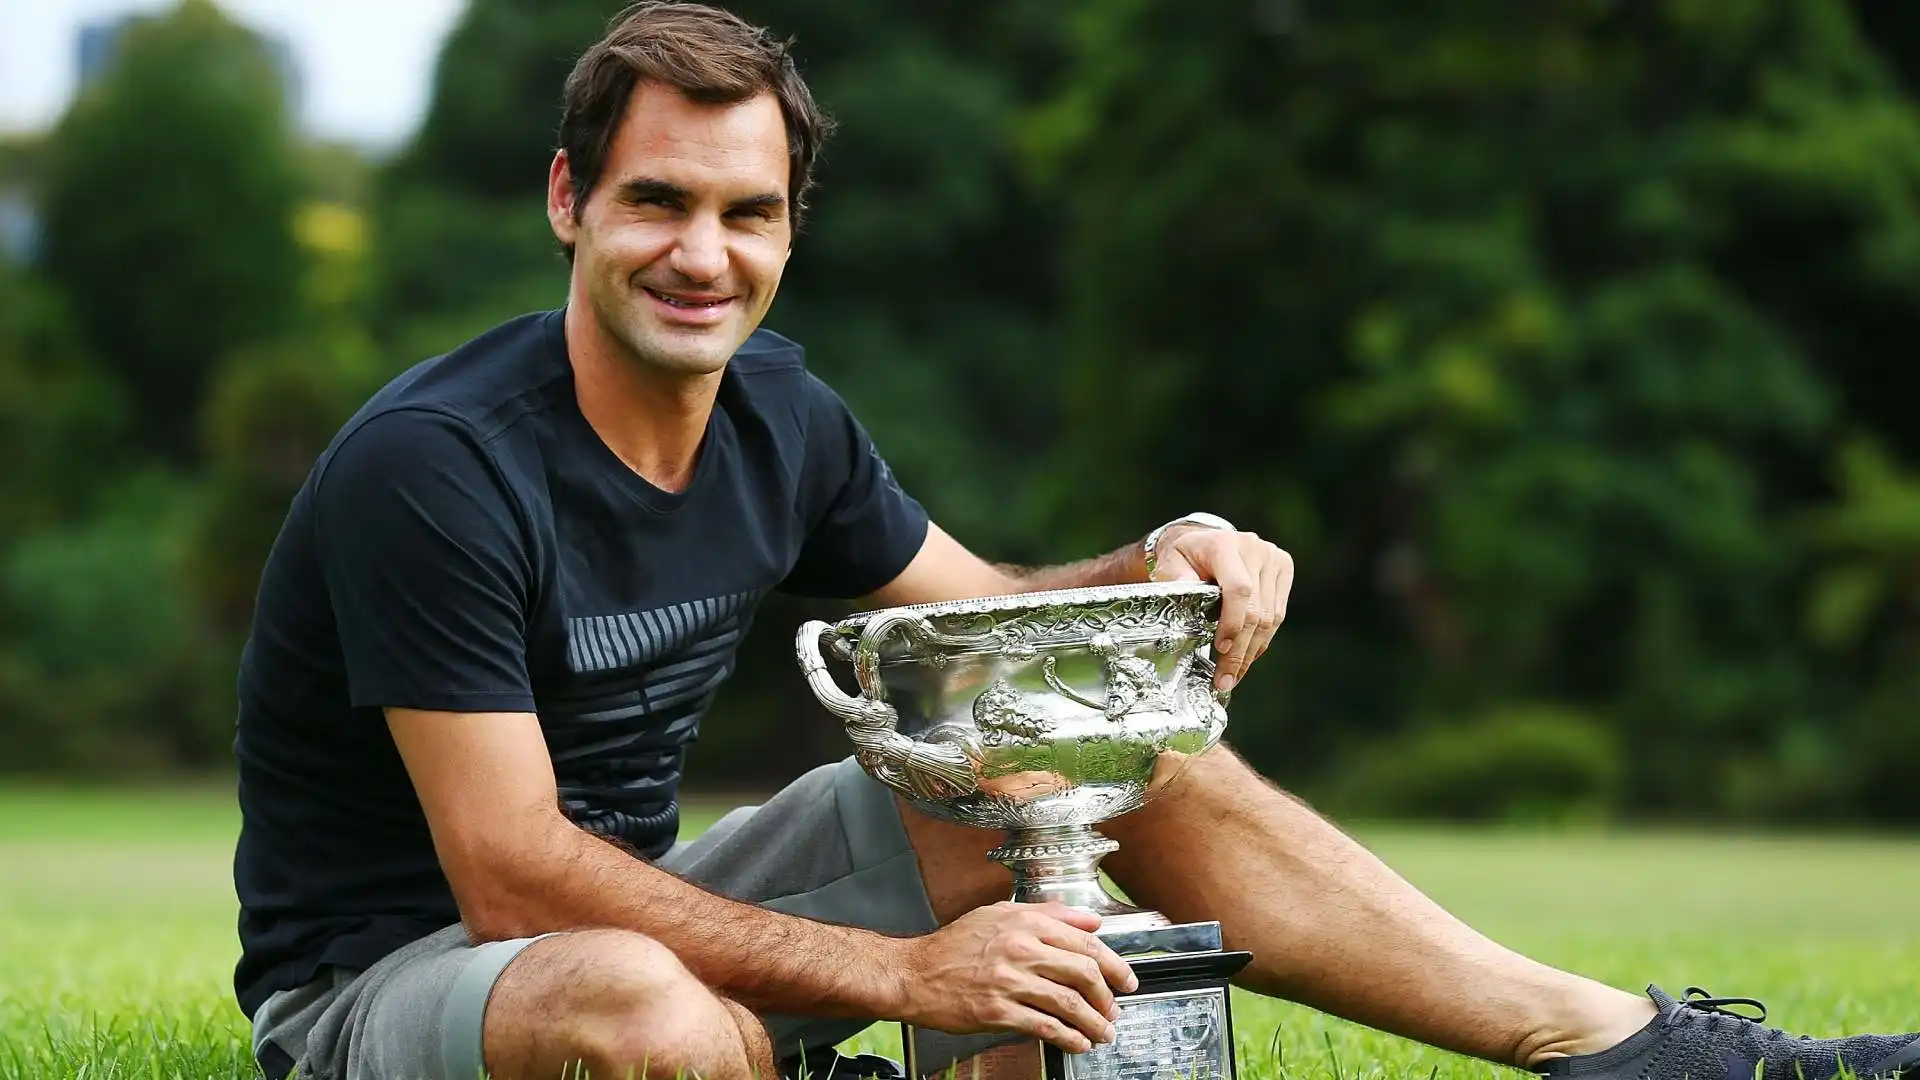 L'ultimo Slam vinto da Roger Federer sono stati gli Australian Open, nel 2017